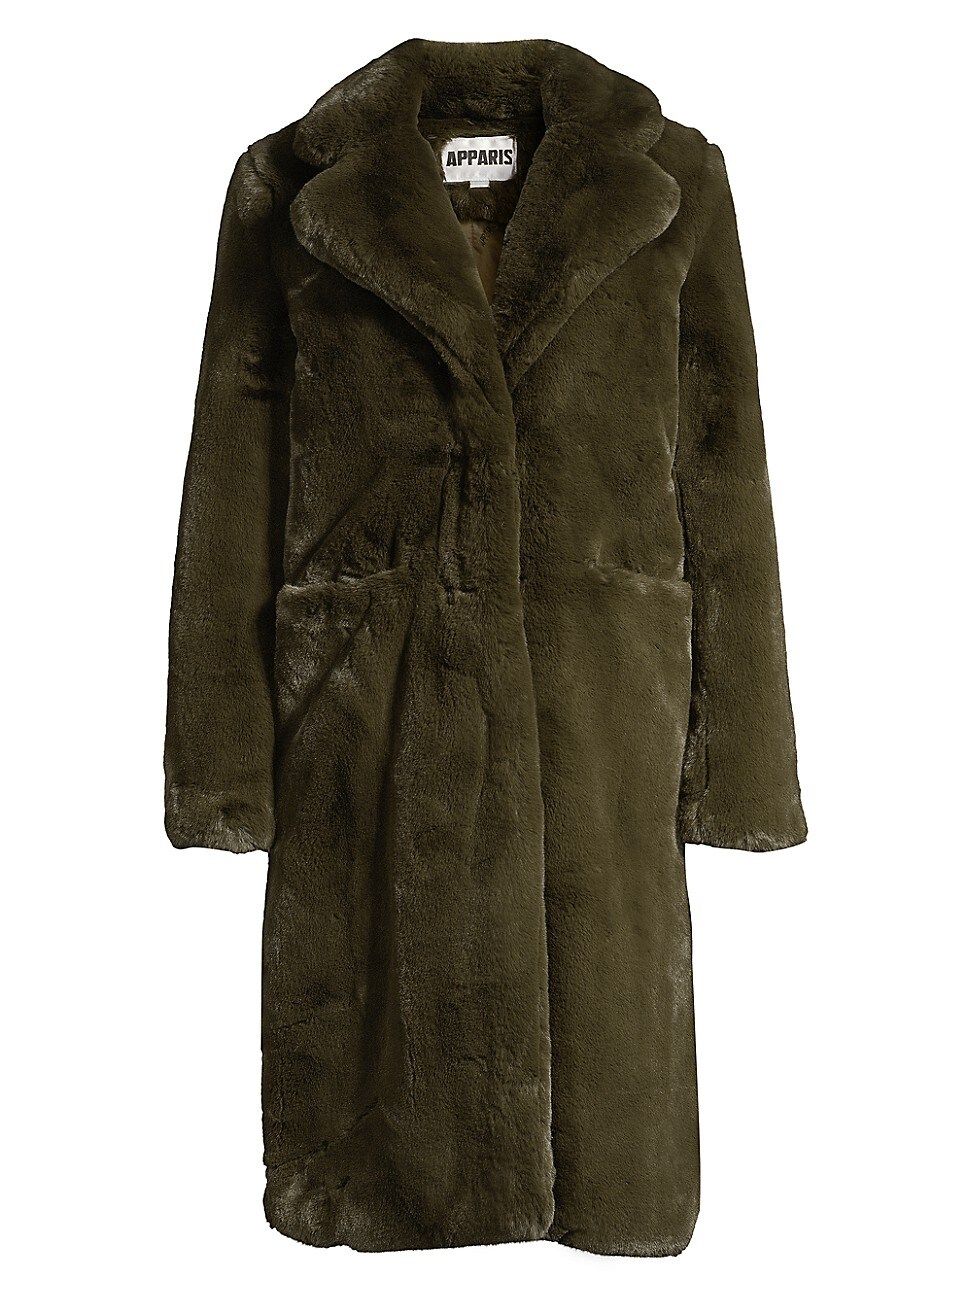 Apparis Women's Laure Plush Faux Fur Coat - Army Green - Size Small | Saks Fifth Avenue